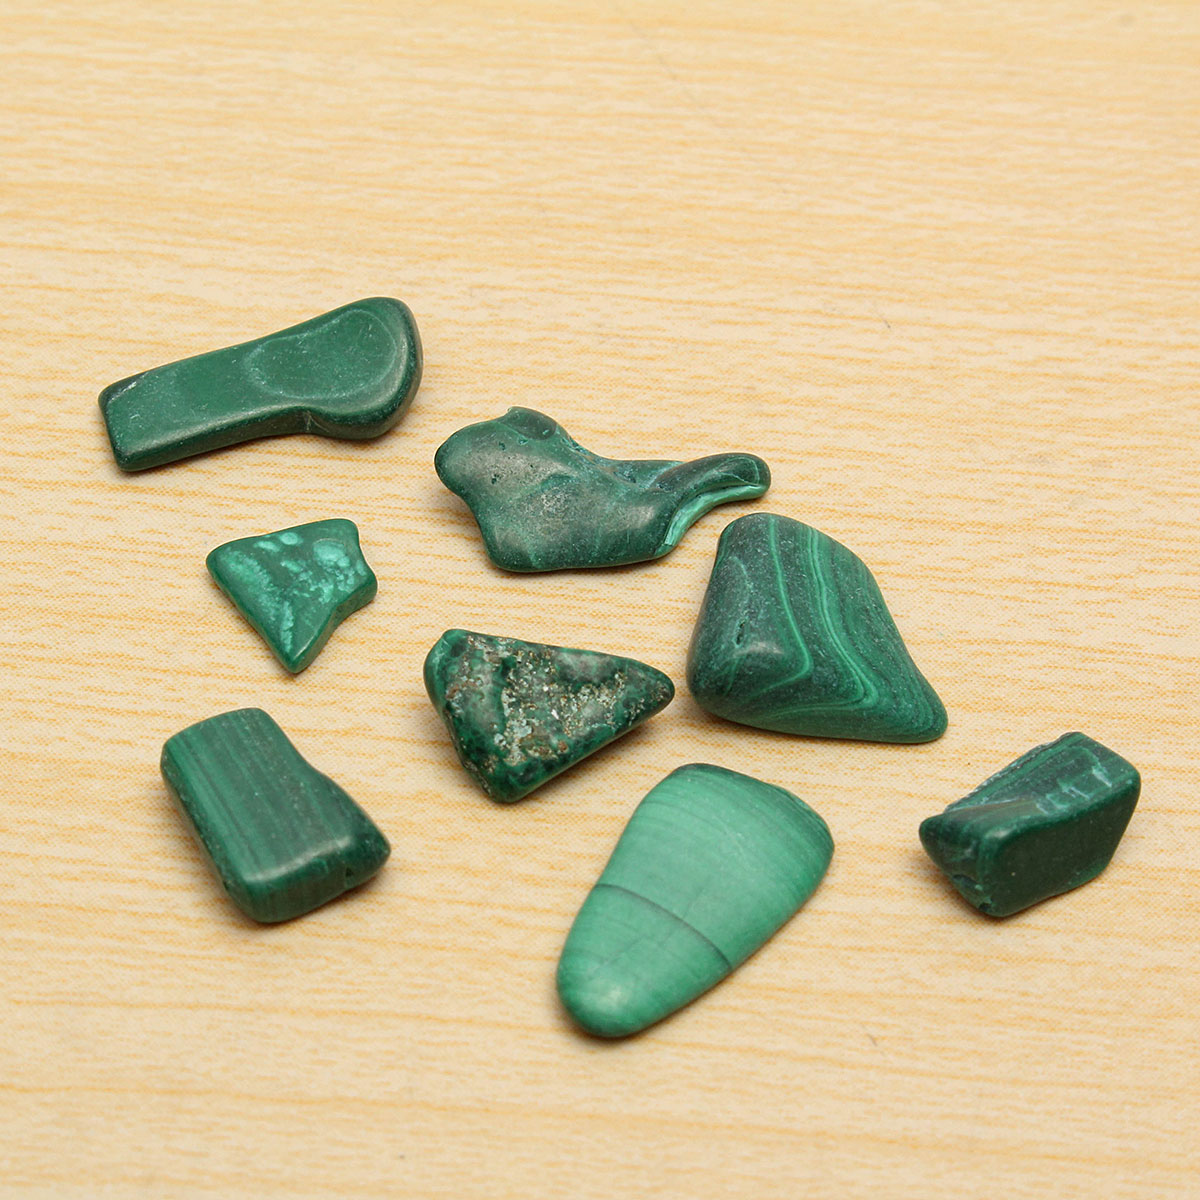 100g-Malachite-Stones-Polished-Body-Healing-DIY-Design-Jewelry-Accessories-1082855